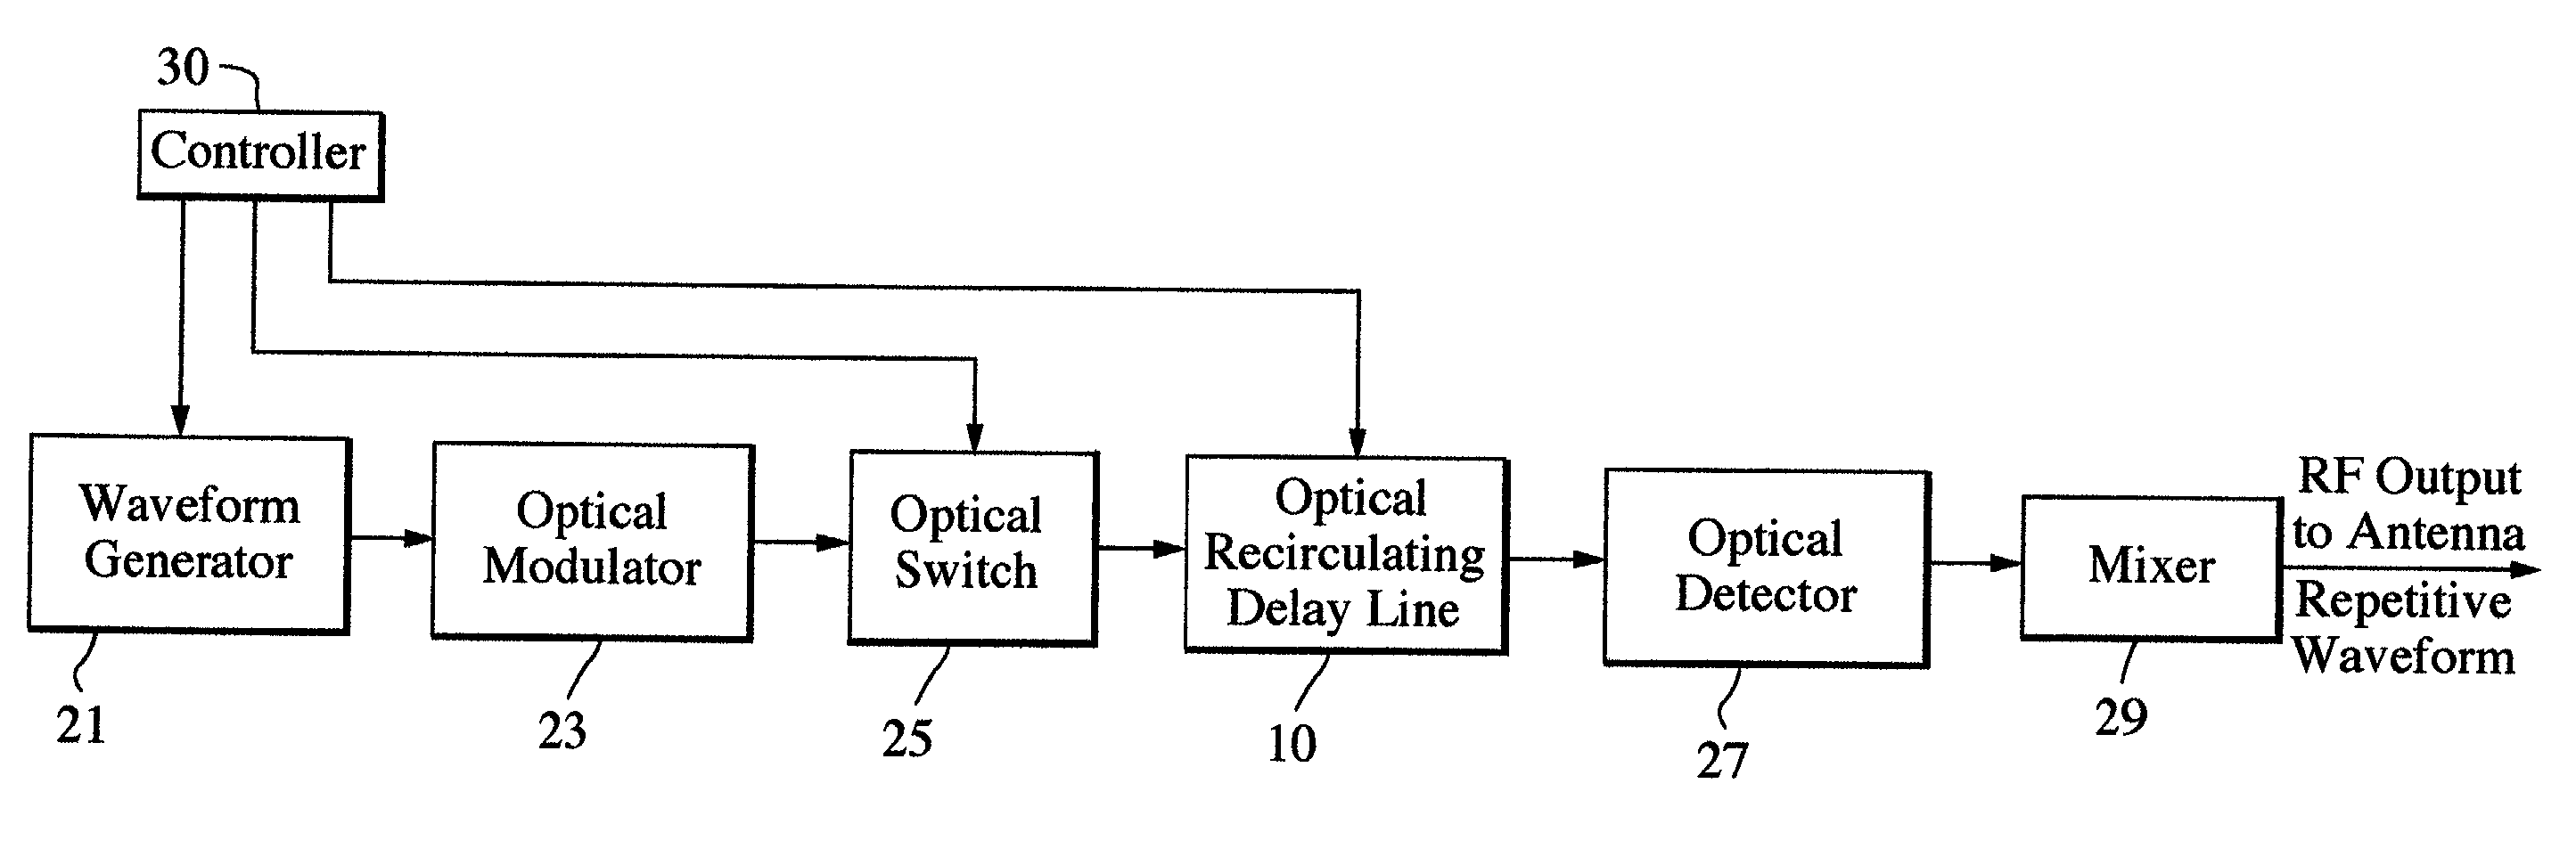 Repetitive waveform generator recirculating delay line